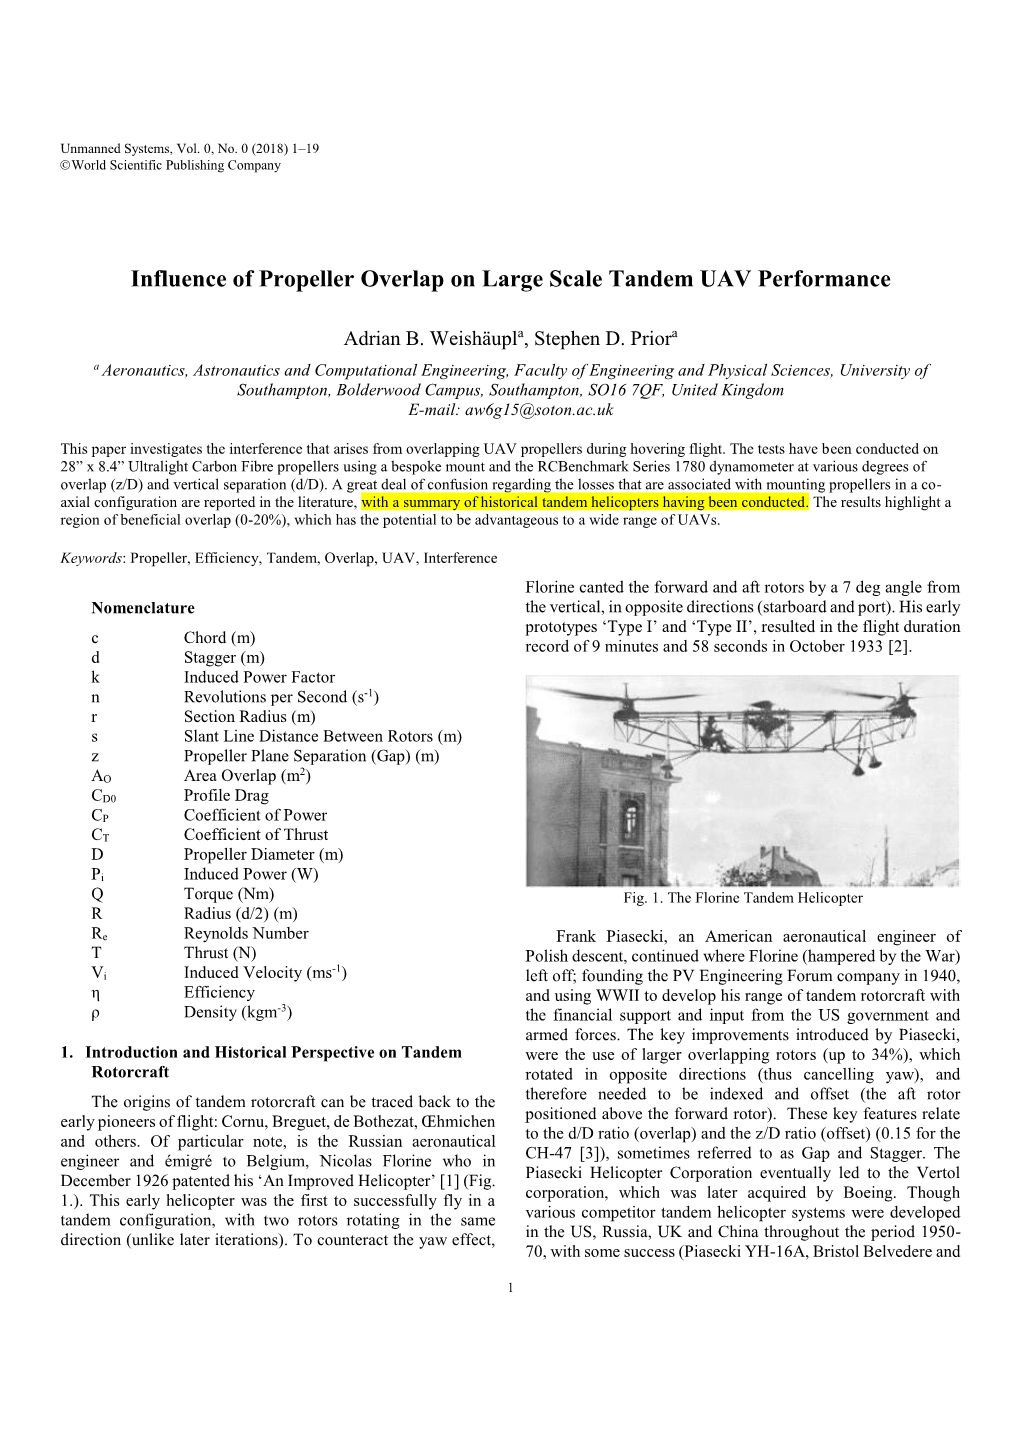 Influence of Propeller Overlap on Large Scale Tandem UAV Performance